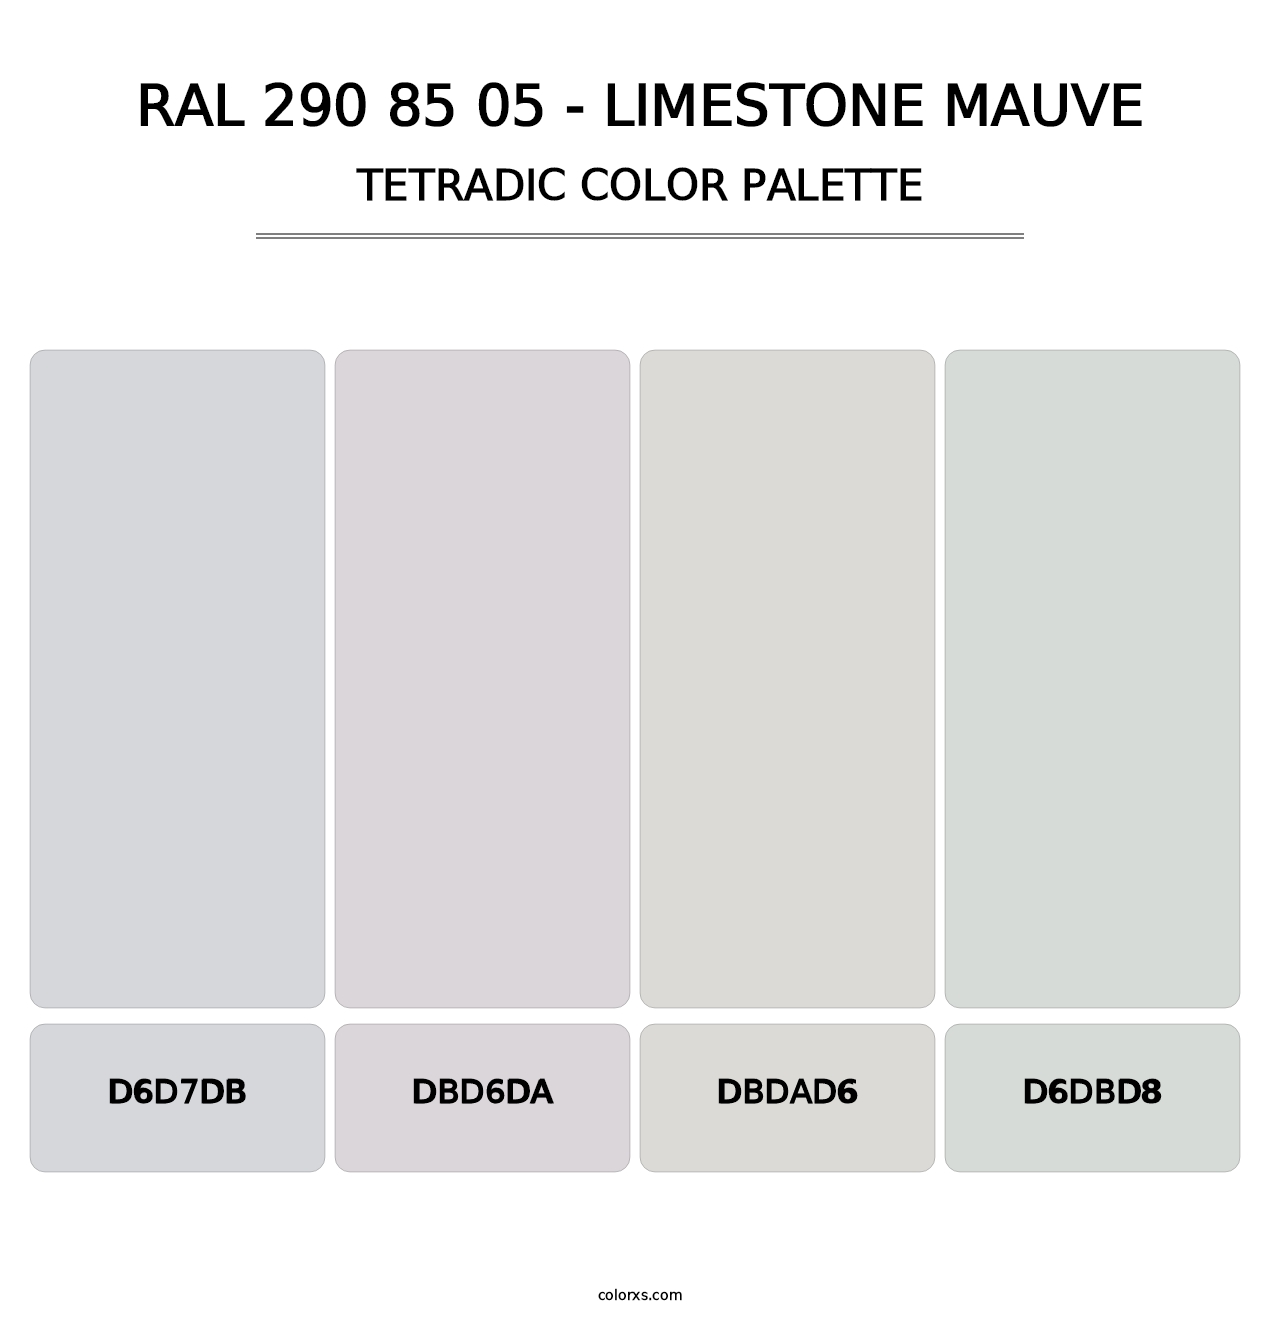 RAL 290 85 05 - Limestone Mauve - Tetradic Color Palette